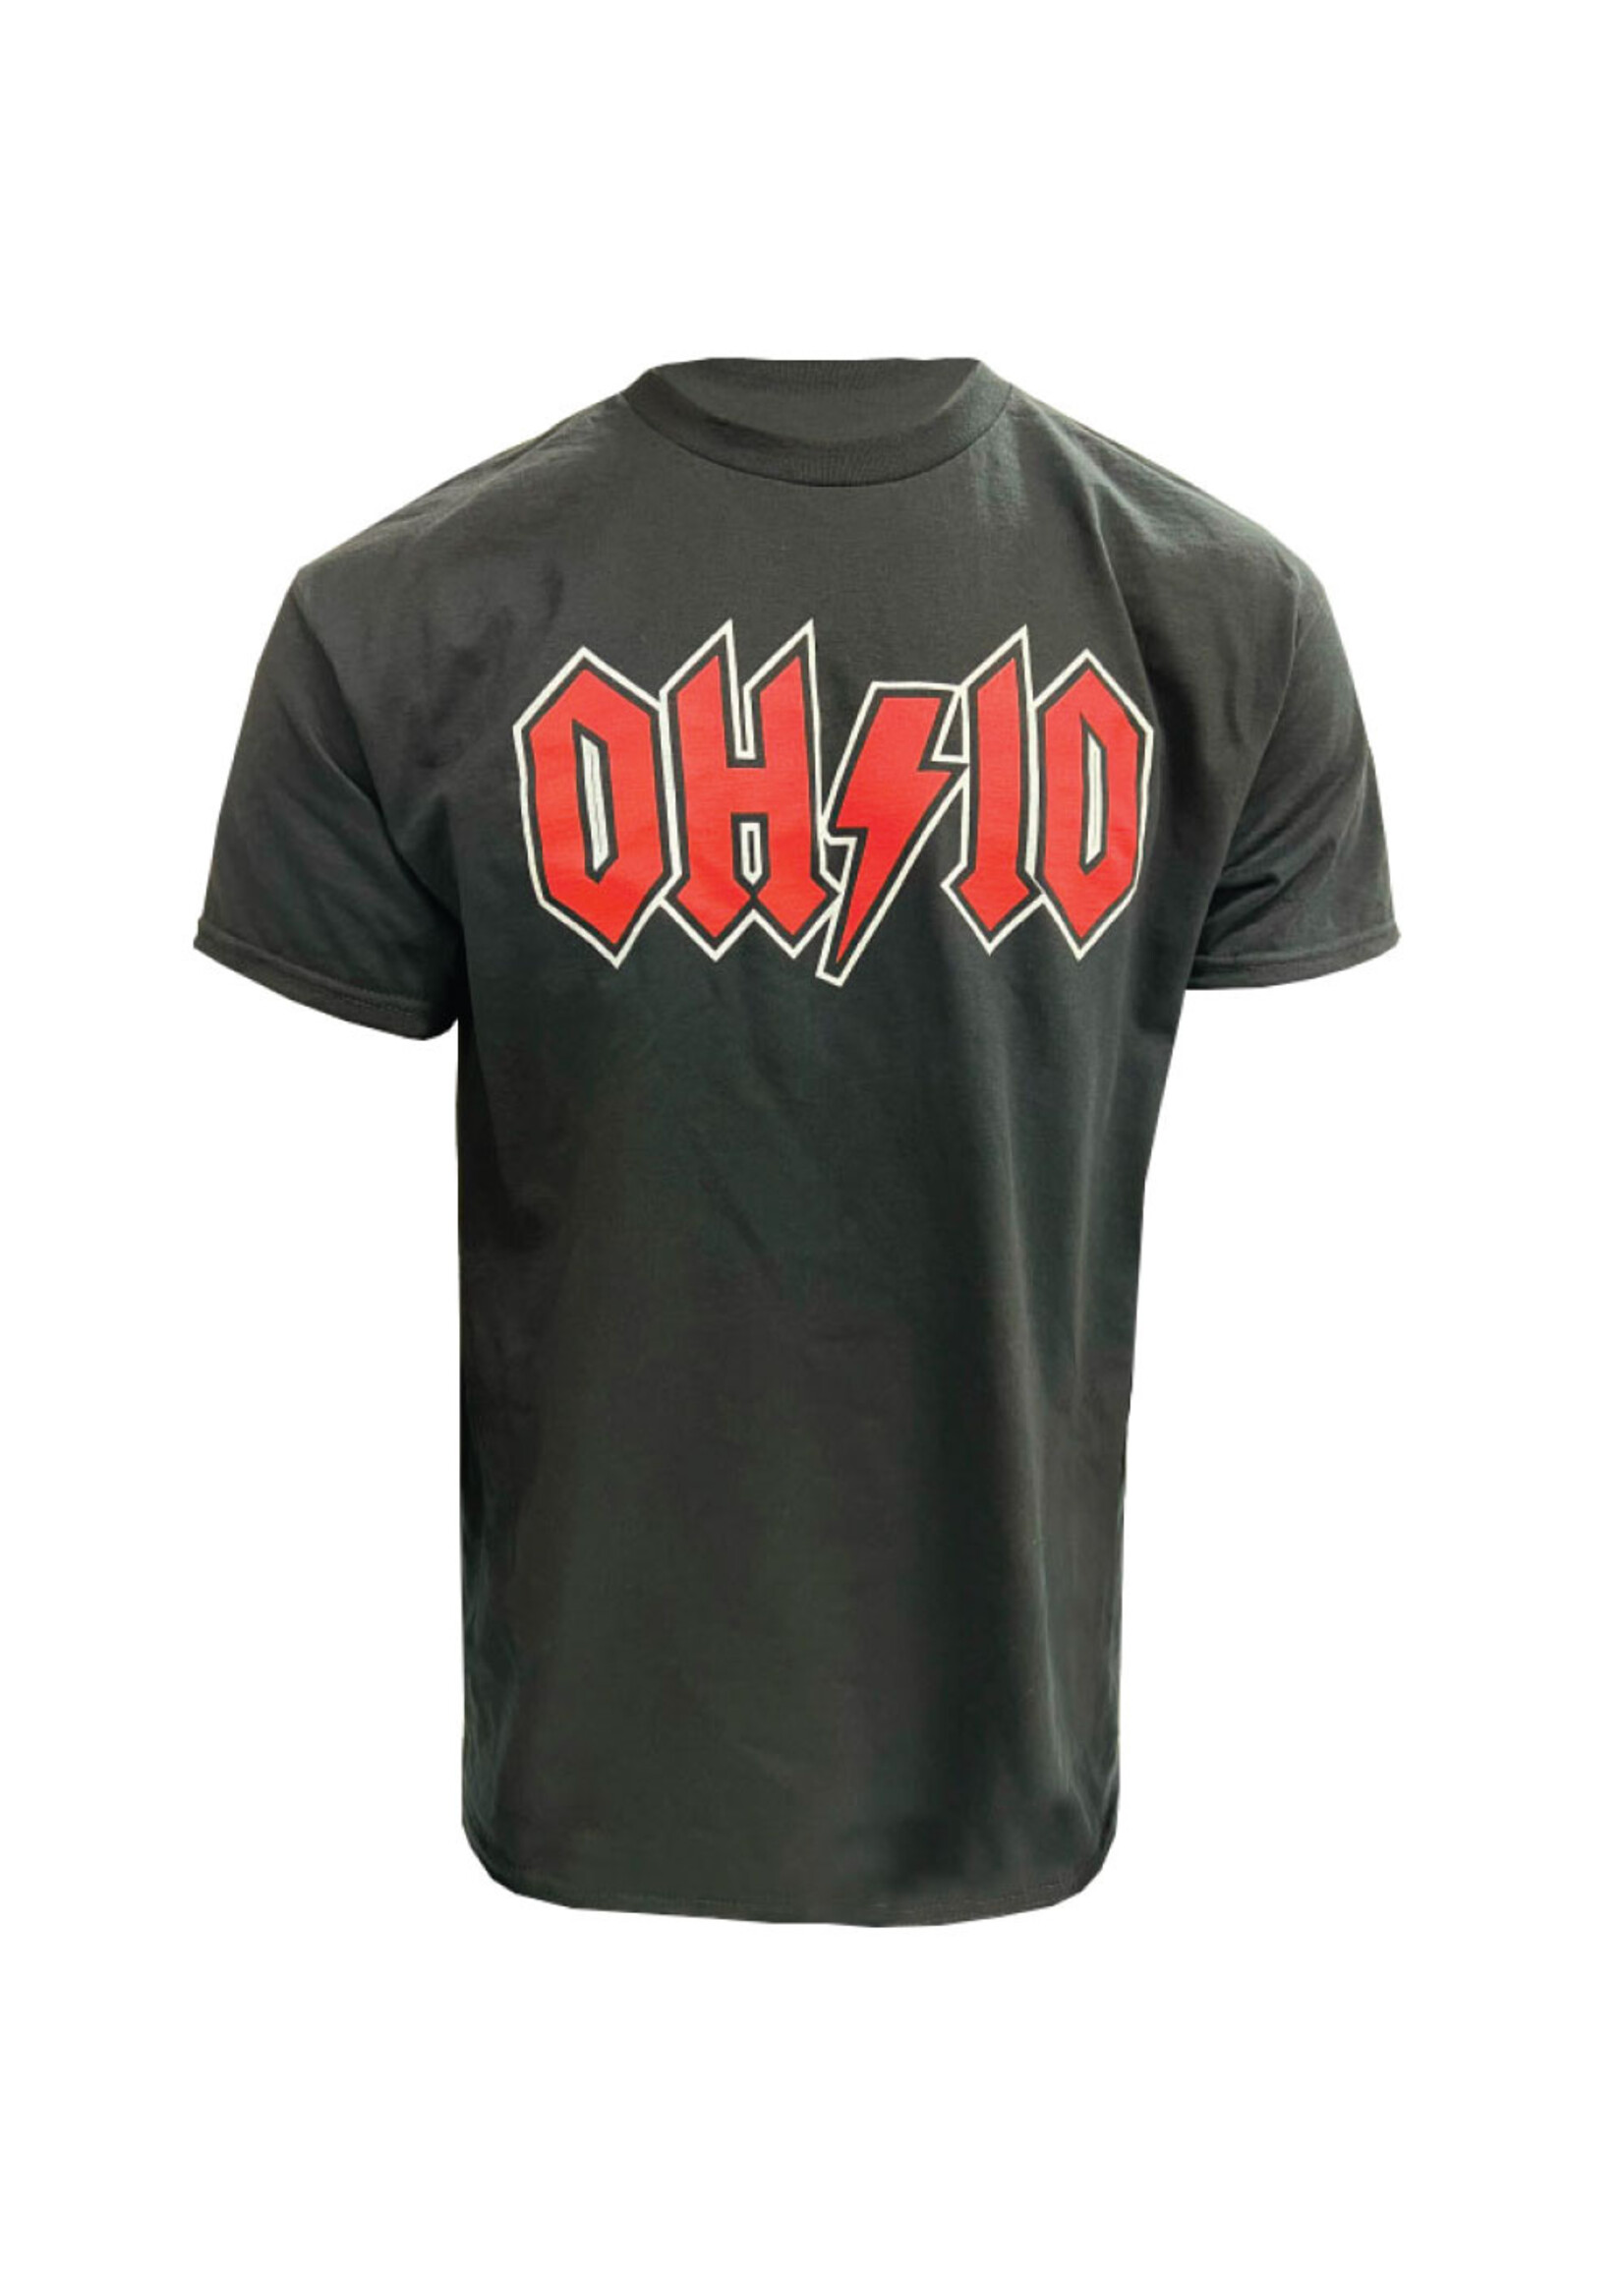 OH-IO AC/DC Theme Shirt